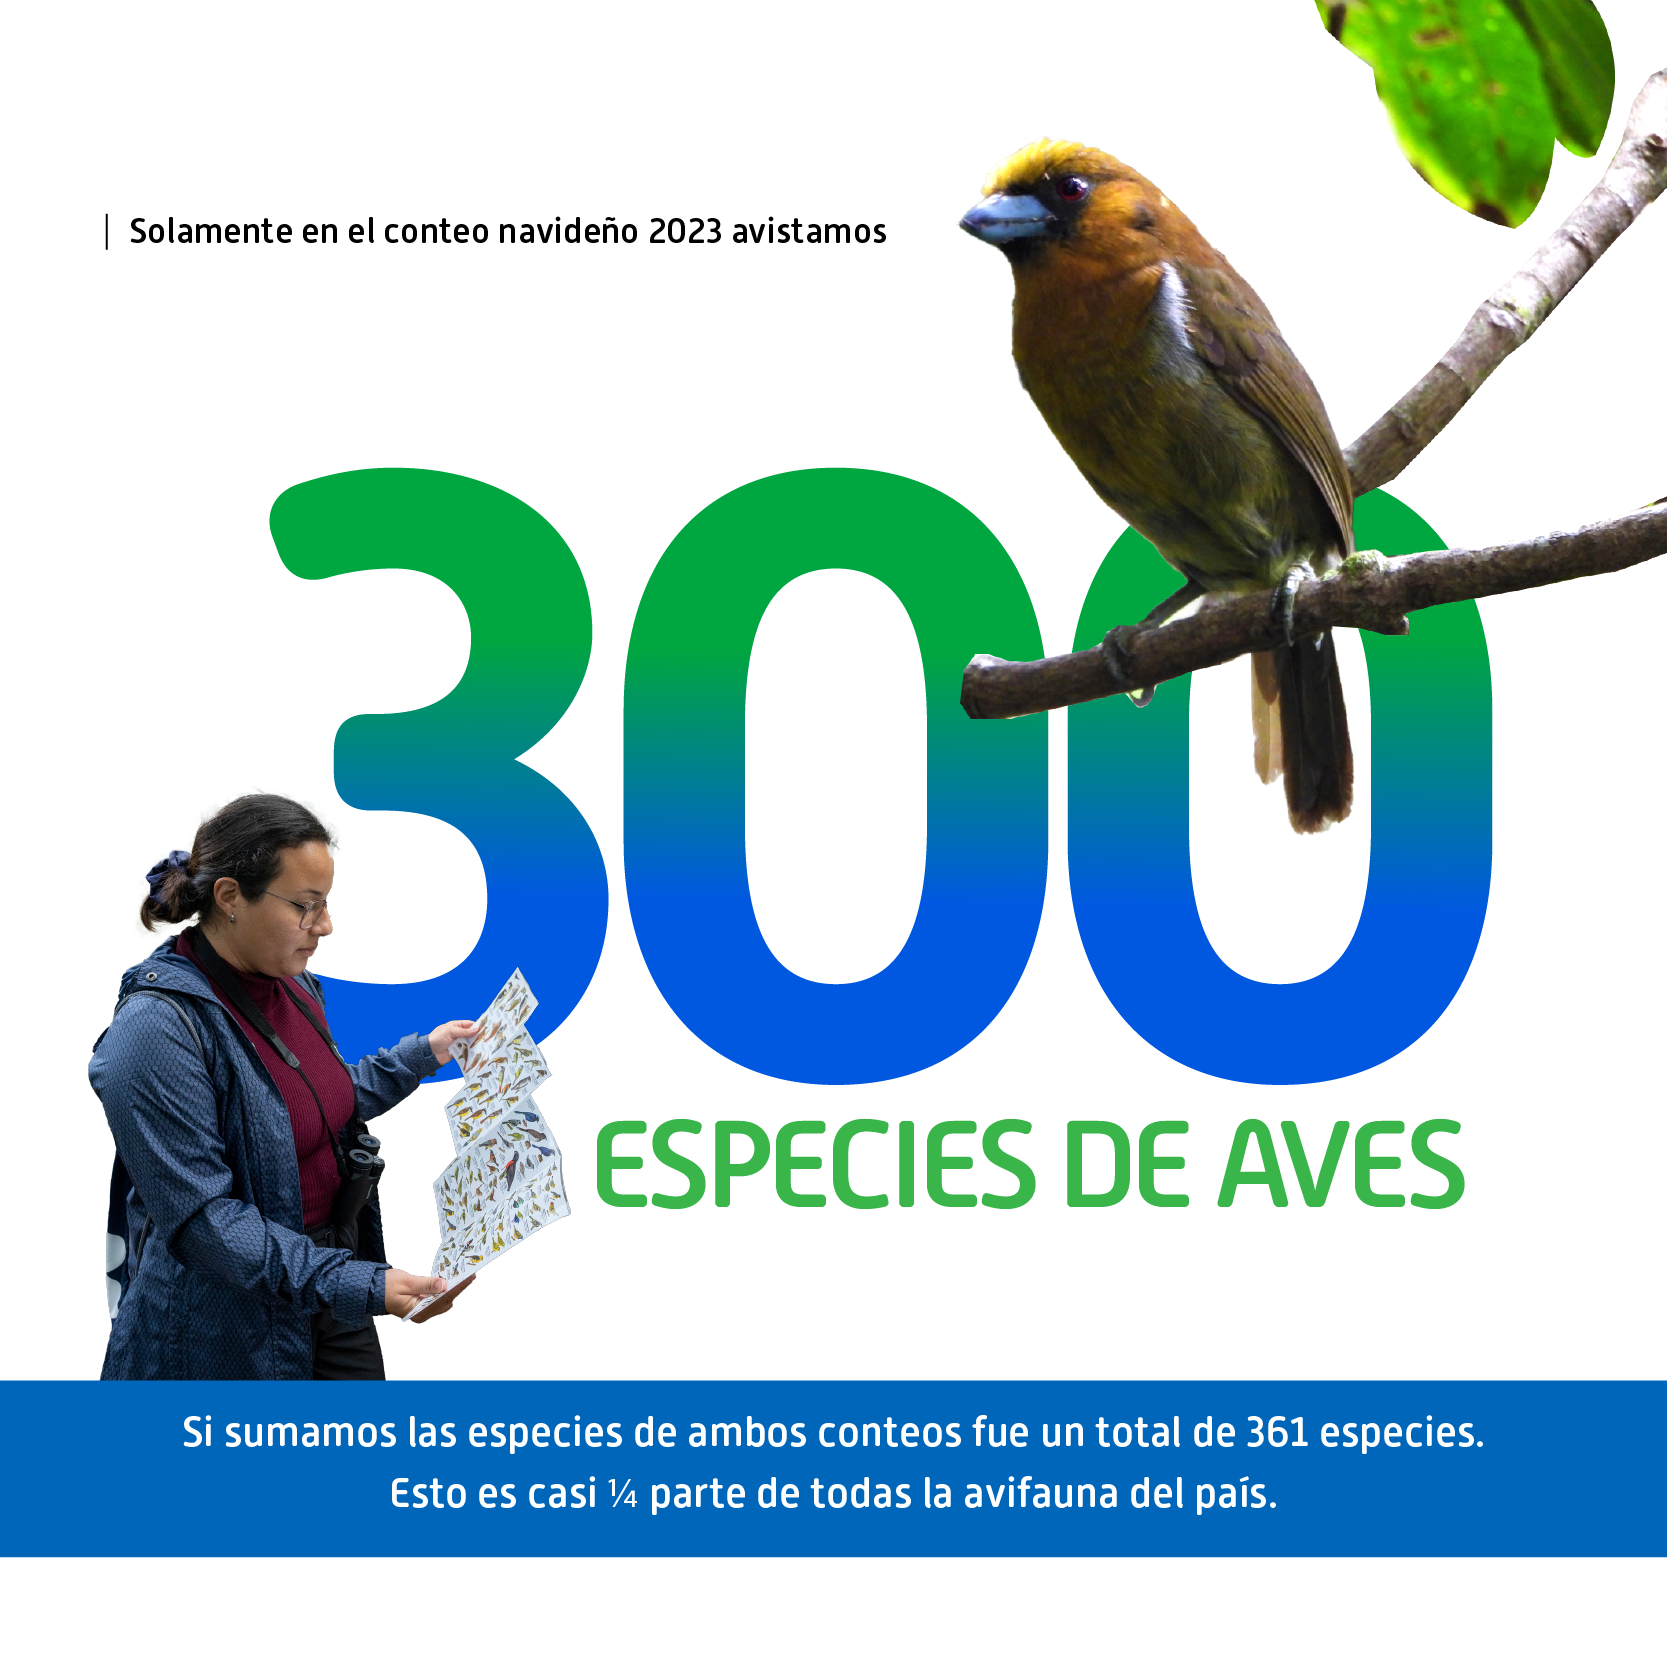 300 especies de aves registradas